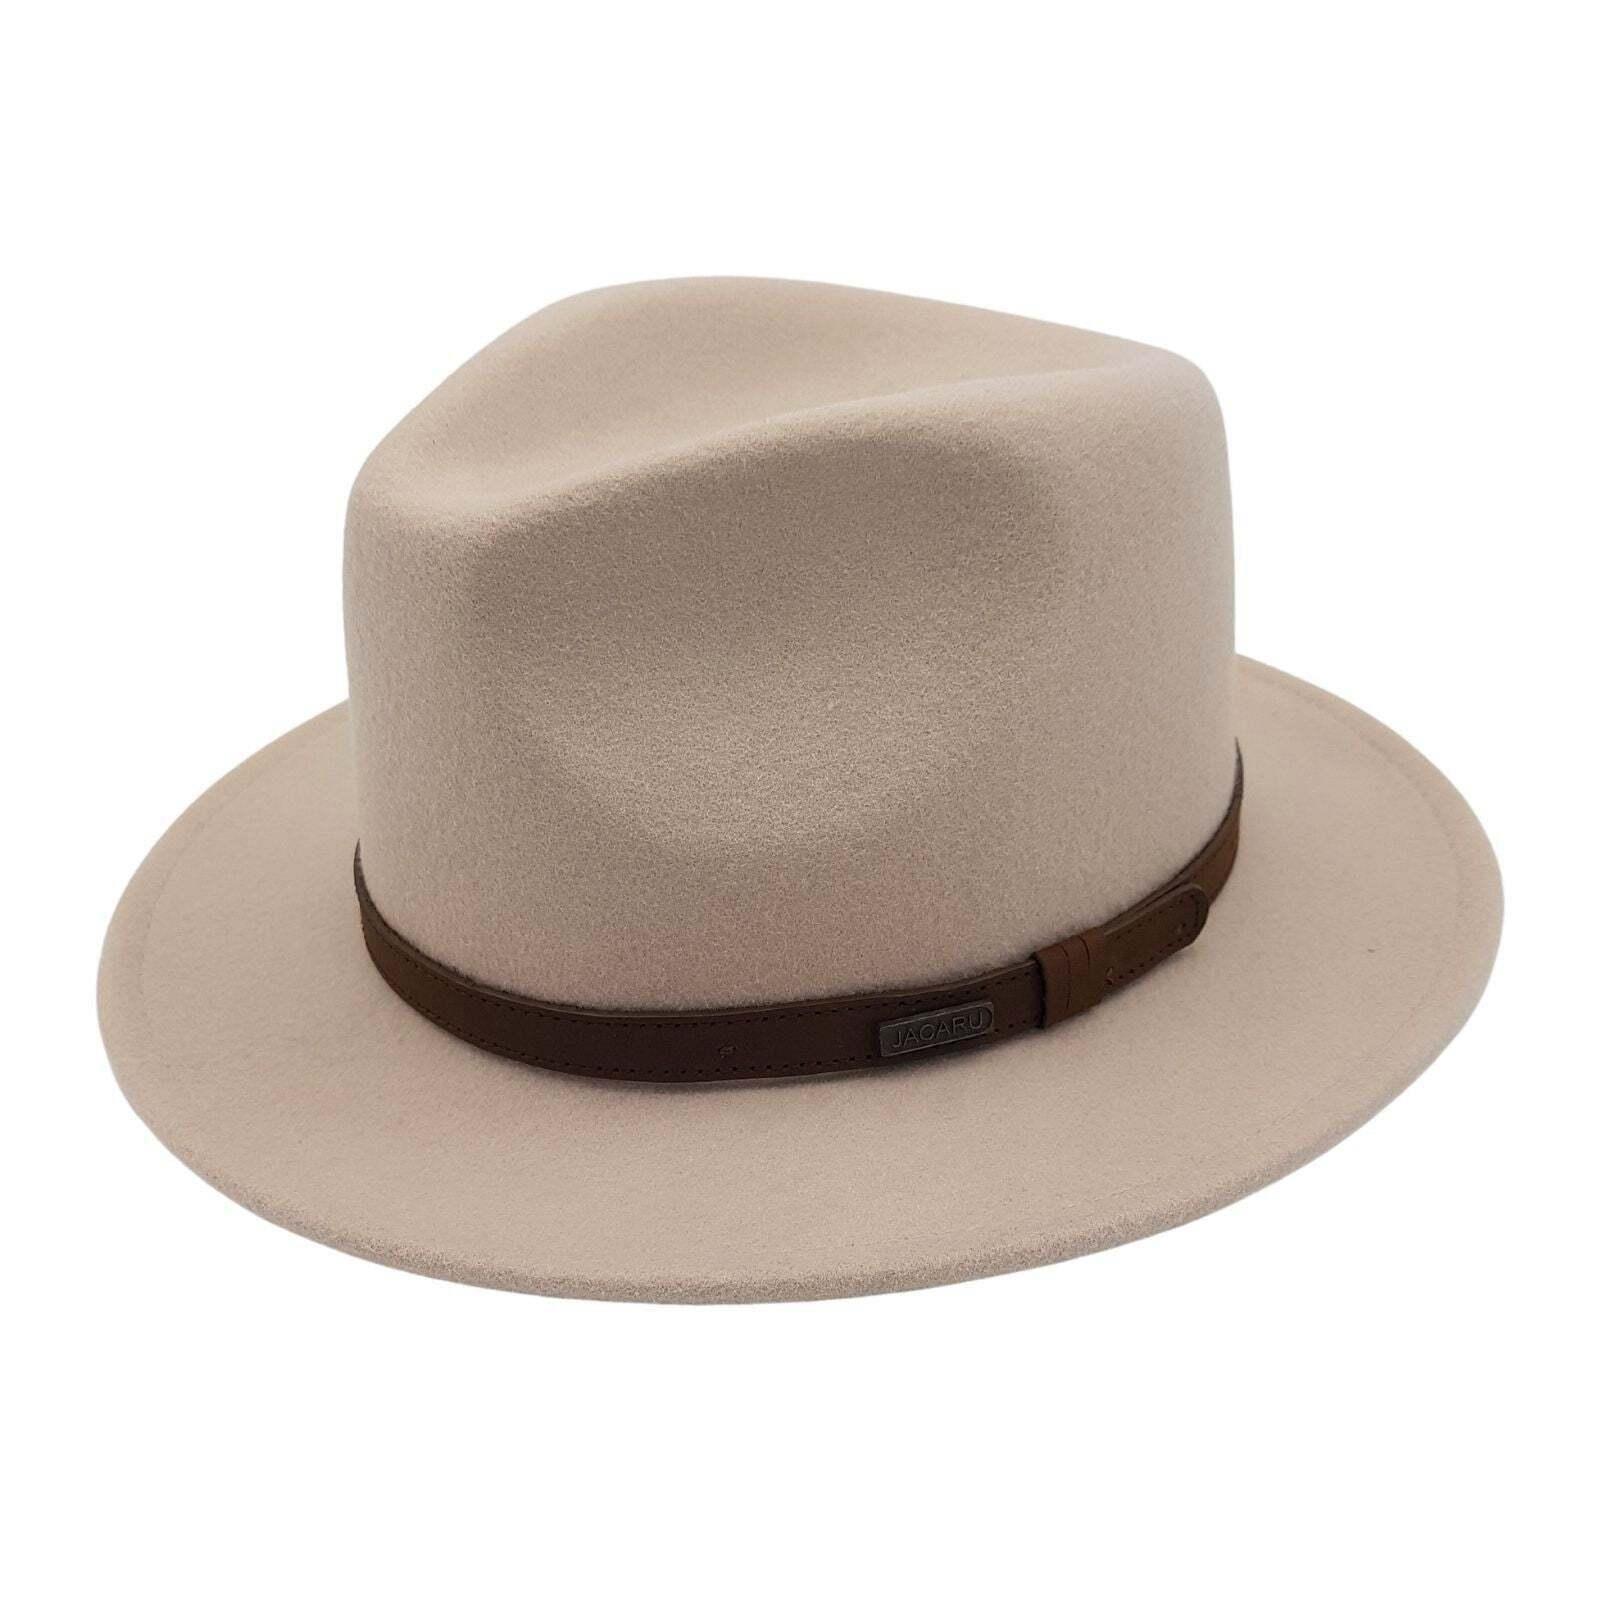 Jacaru 1851 Walkabout Wool Felt Fedora Hat Outback - Cream - Extra Large